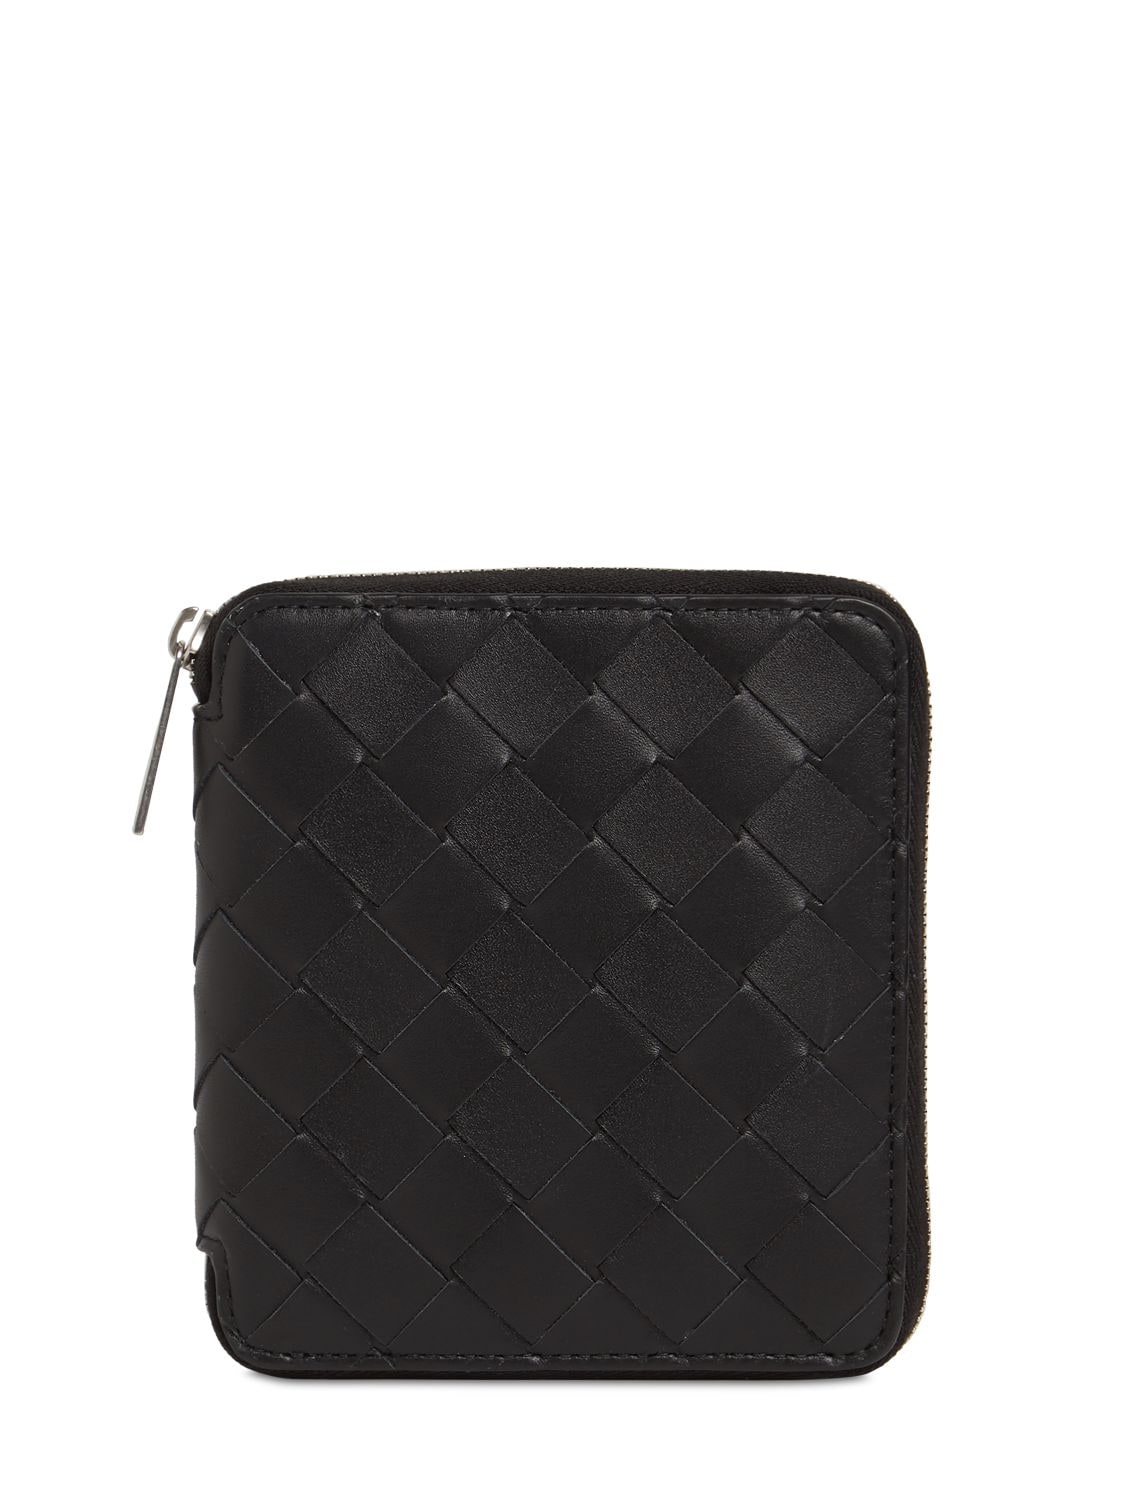 Bottega Veneta Intreccio Leather Wallet In Black